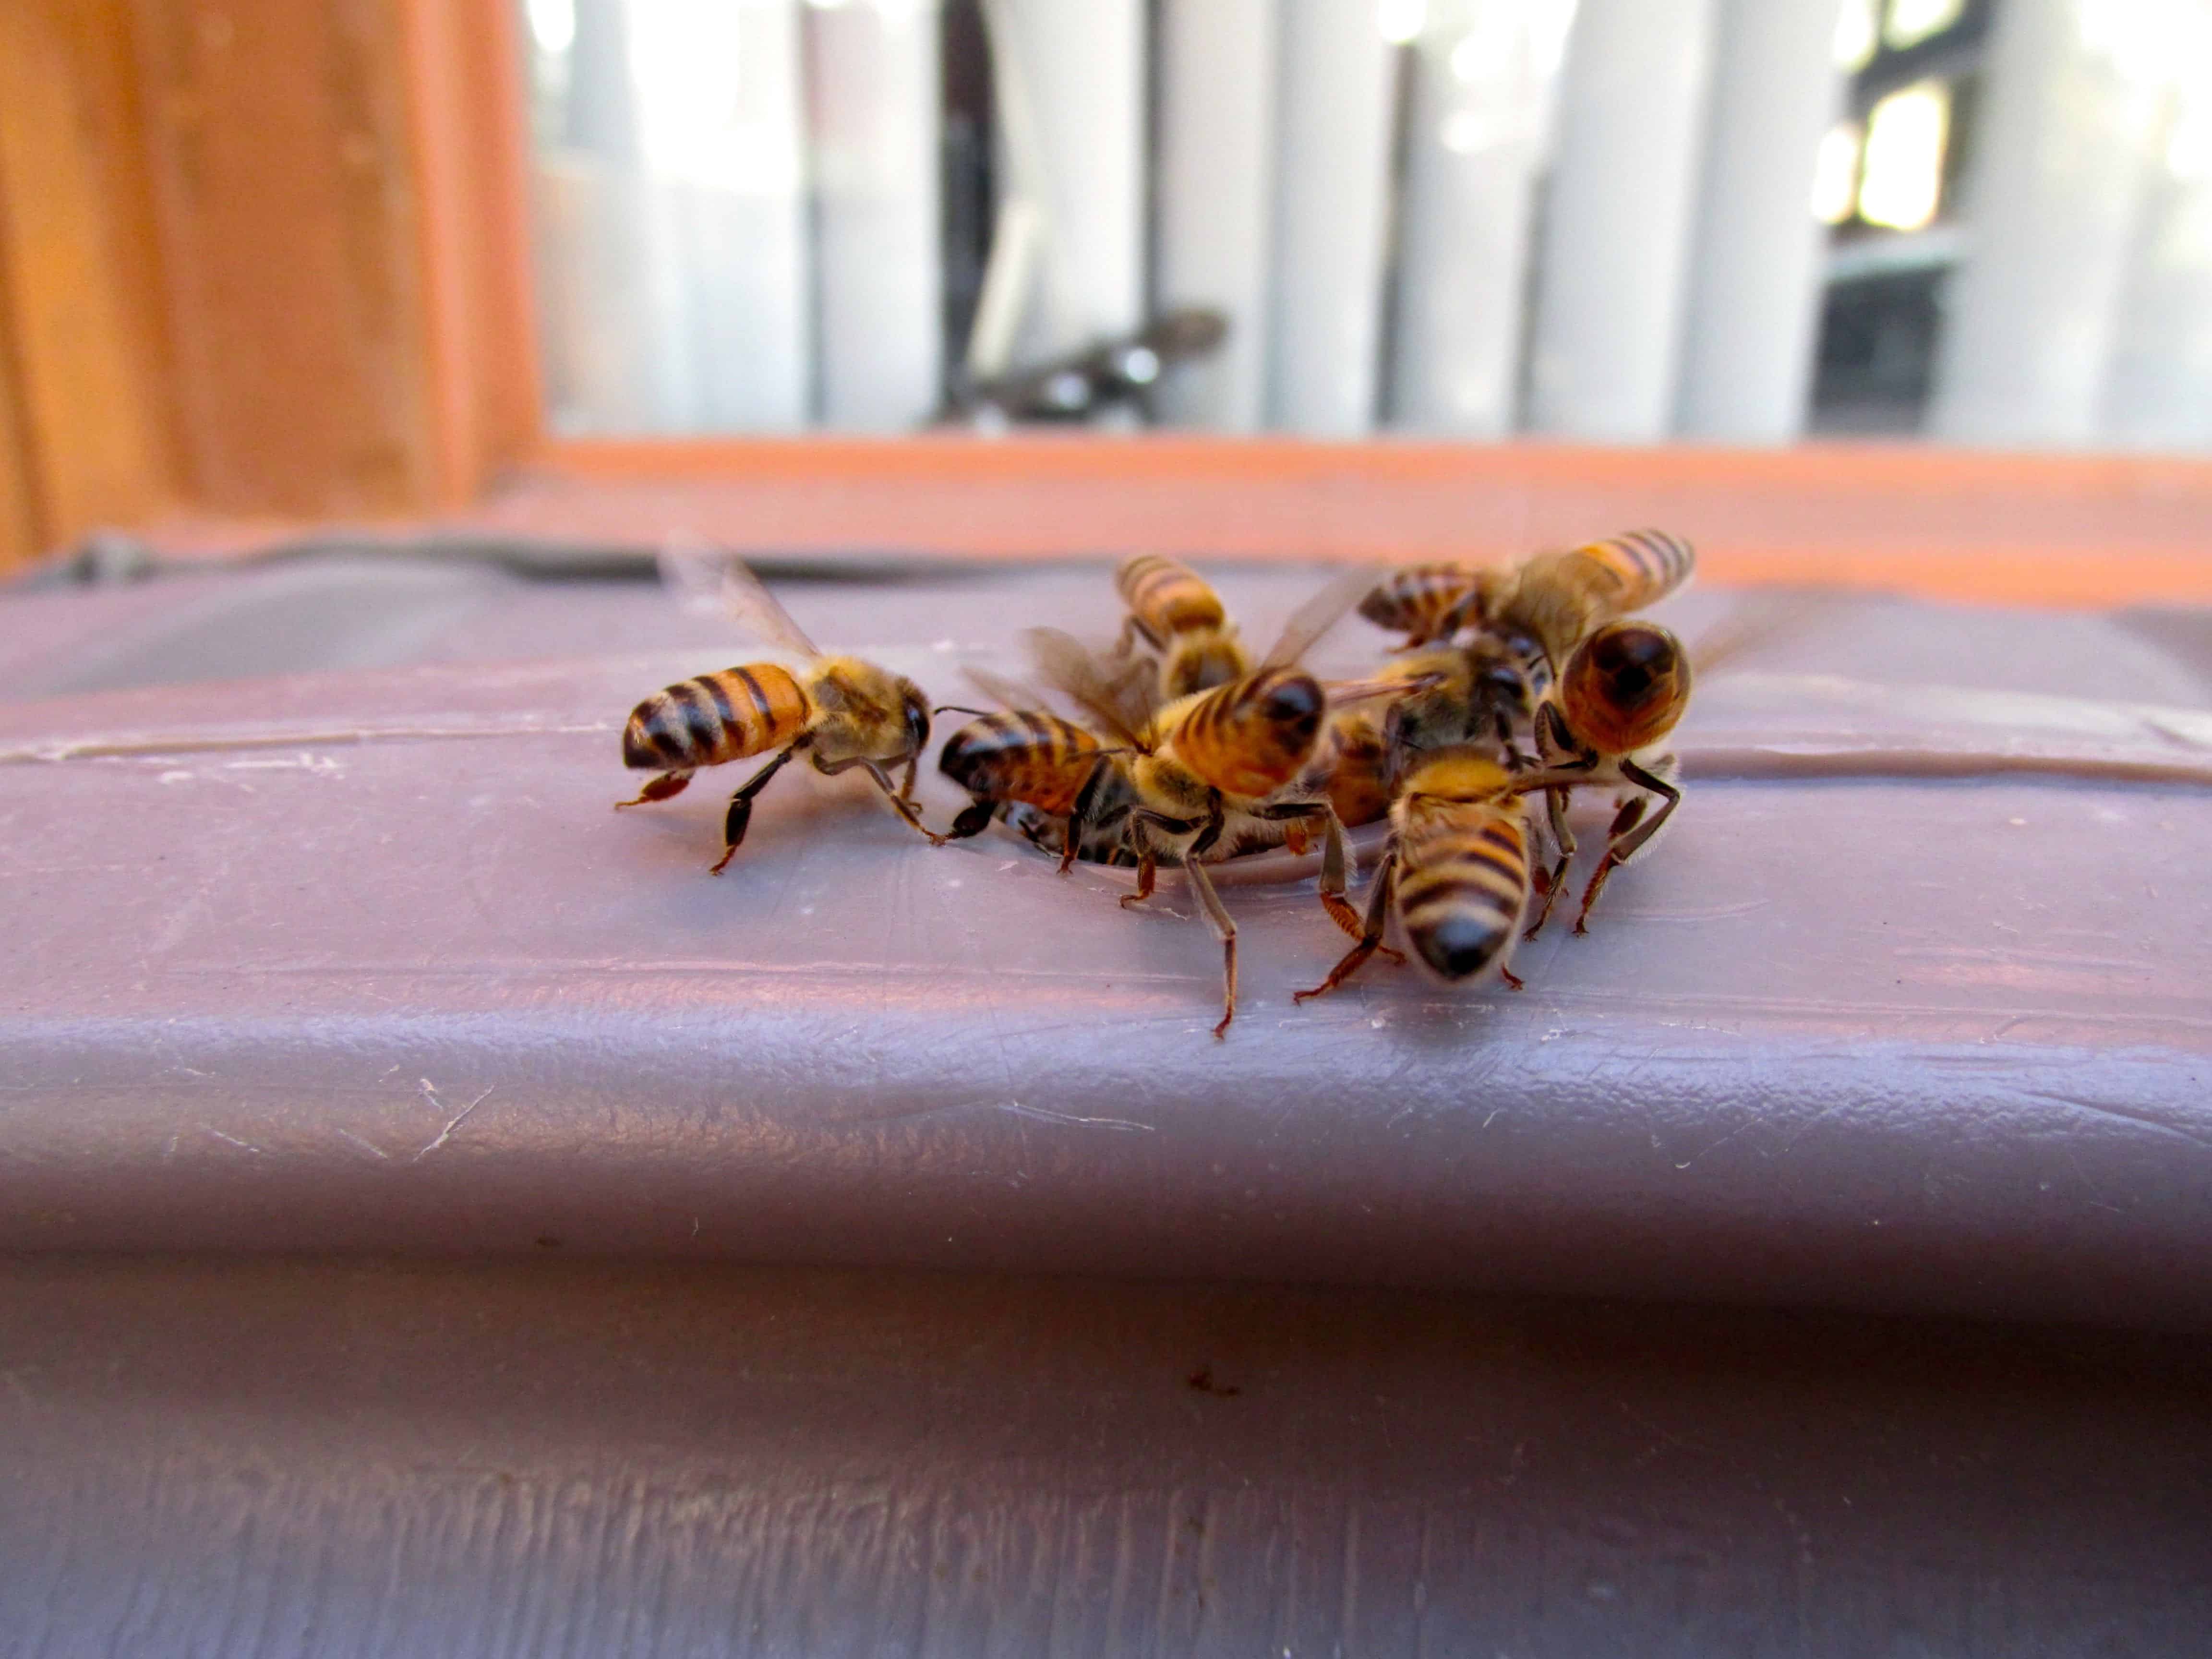 WILD BEES OF TEXAS - Honey & Killer Bees